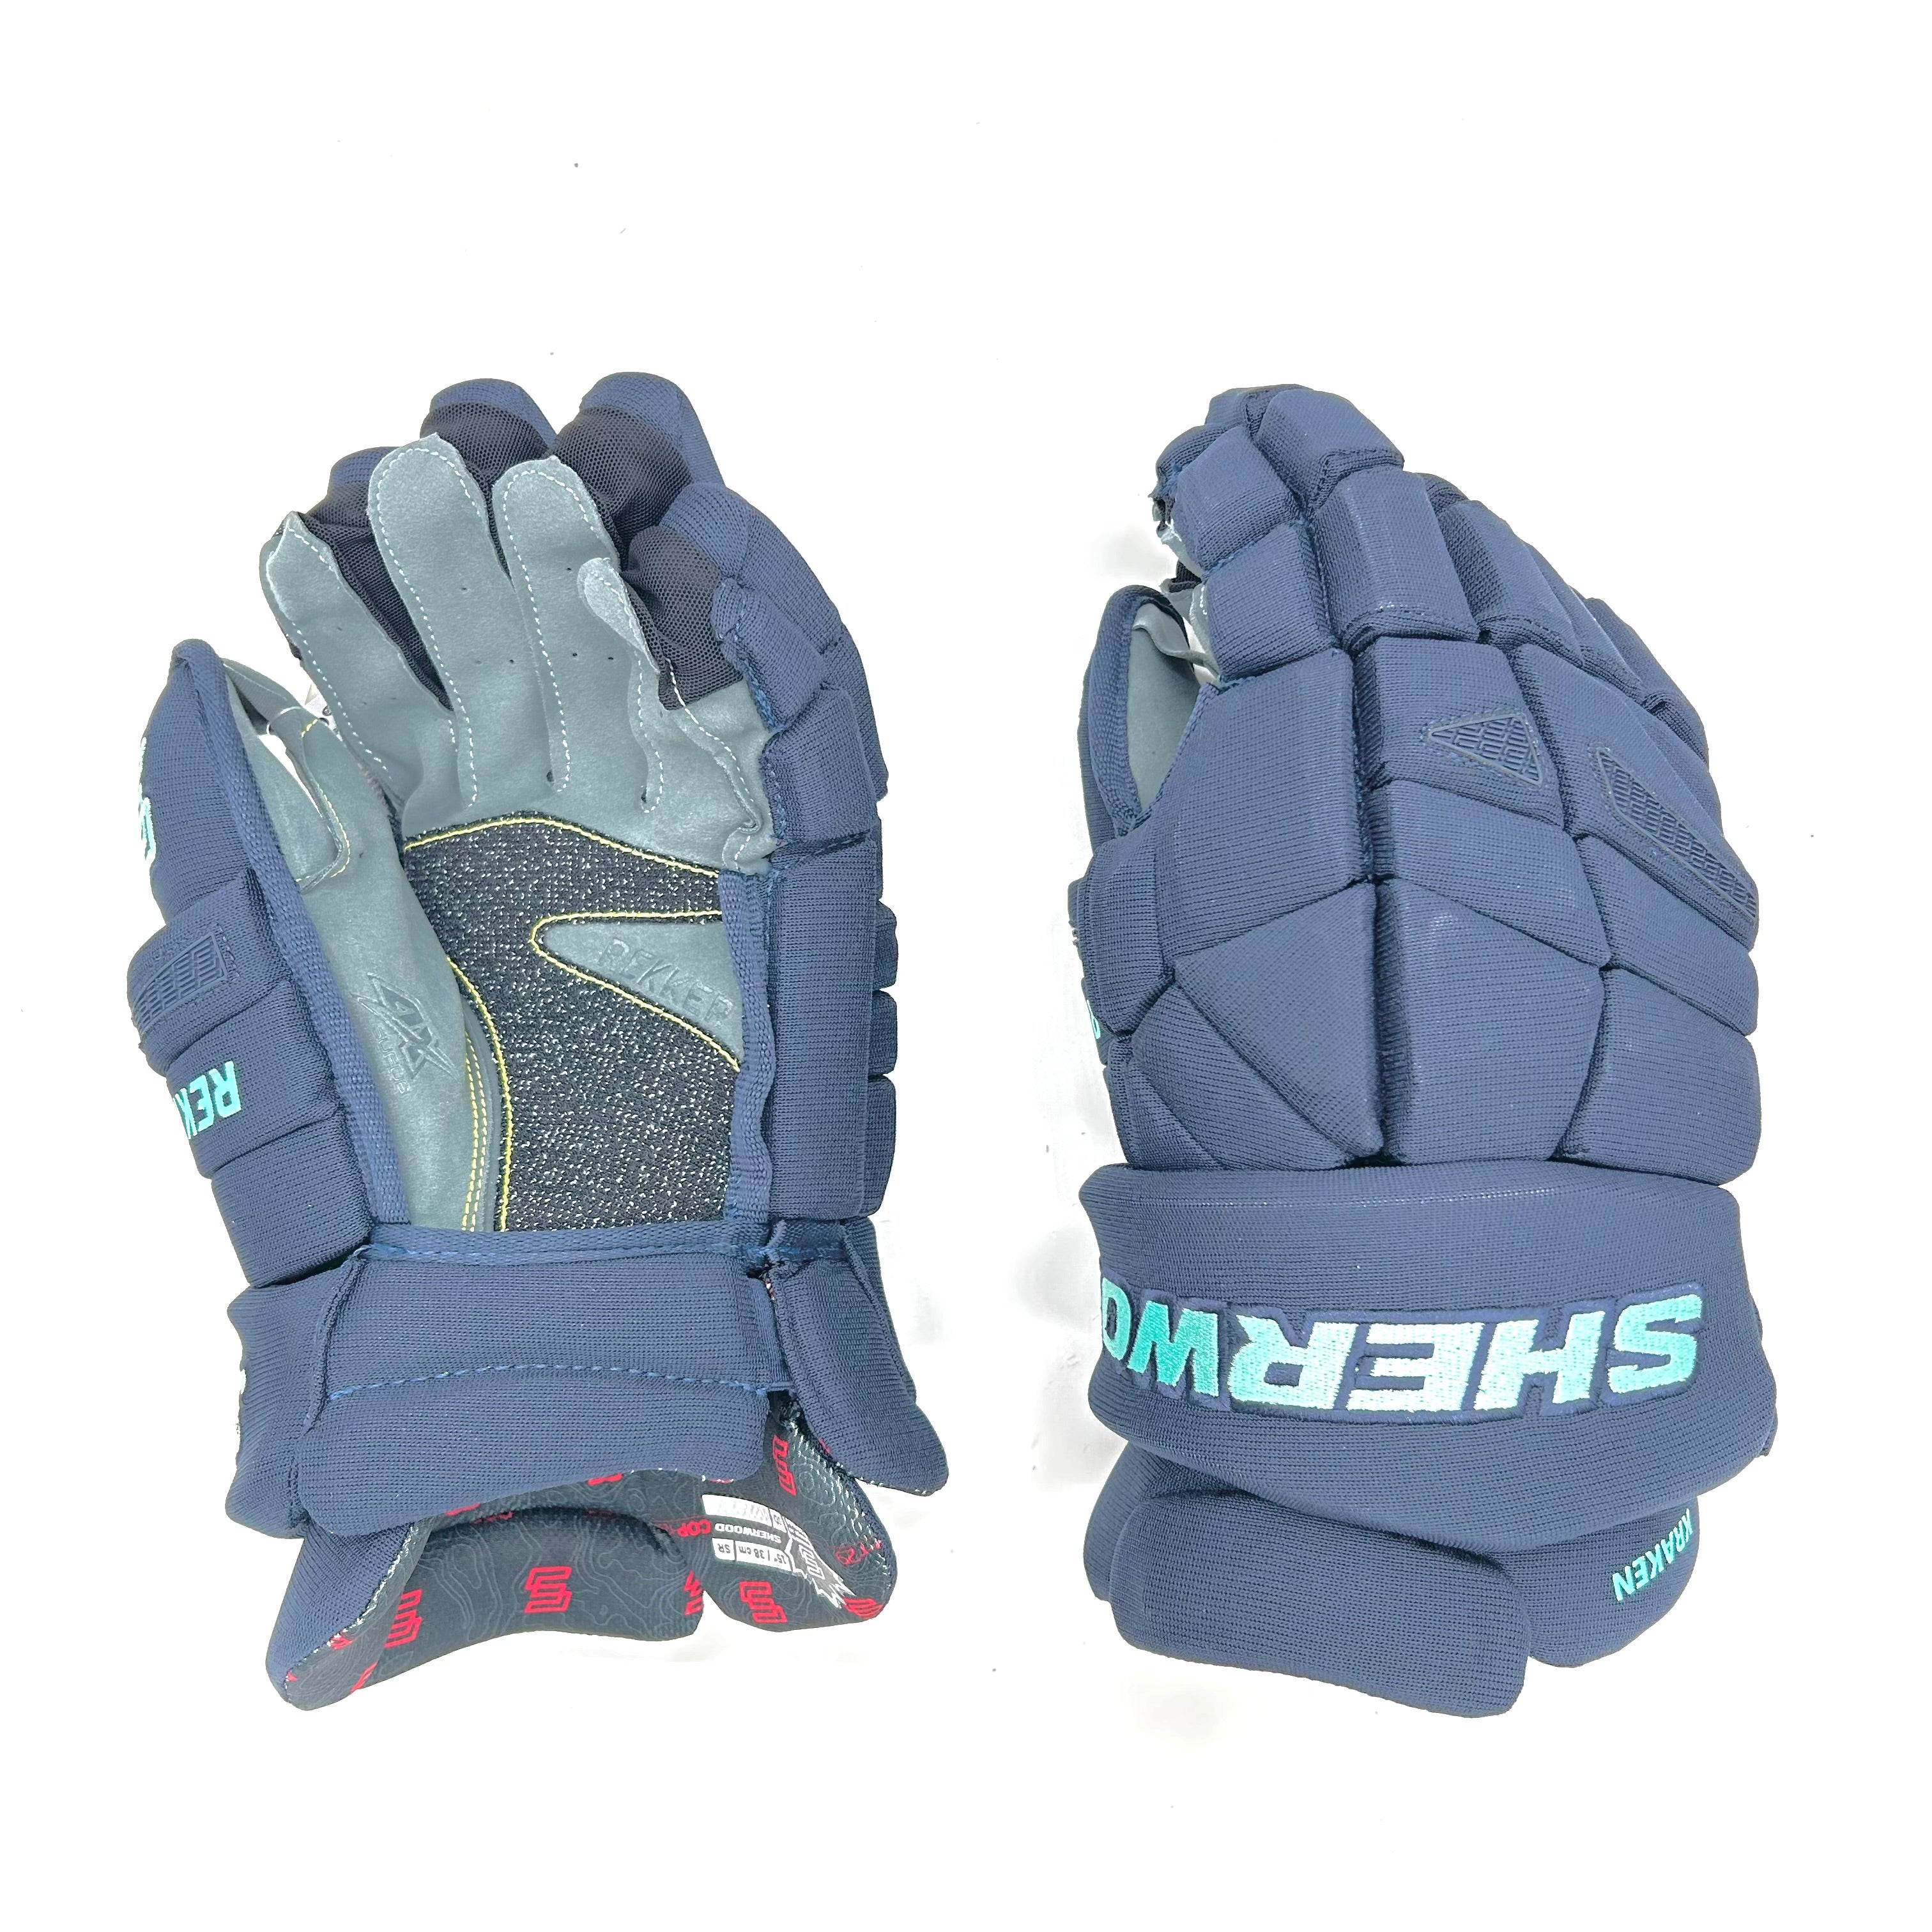 Prostock Vancouver Canucks gloves